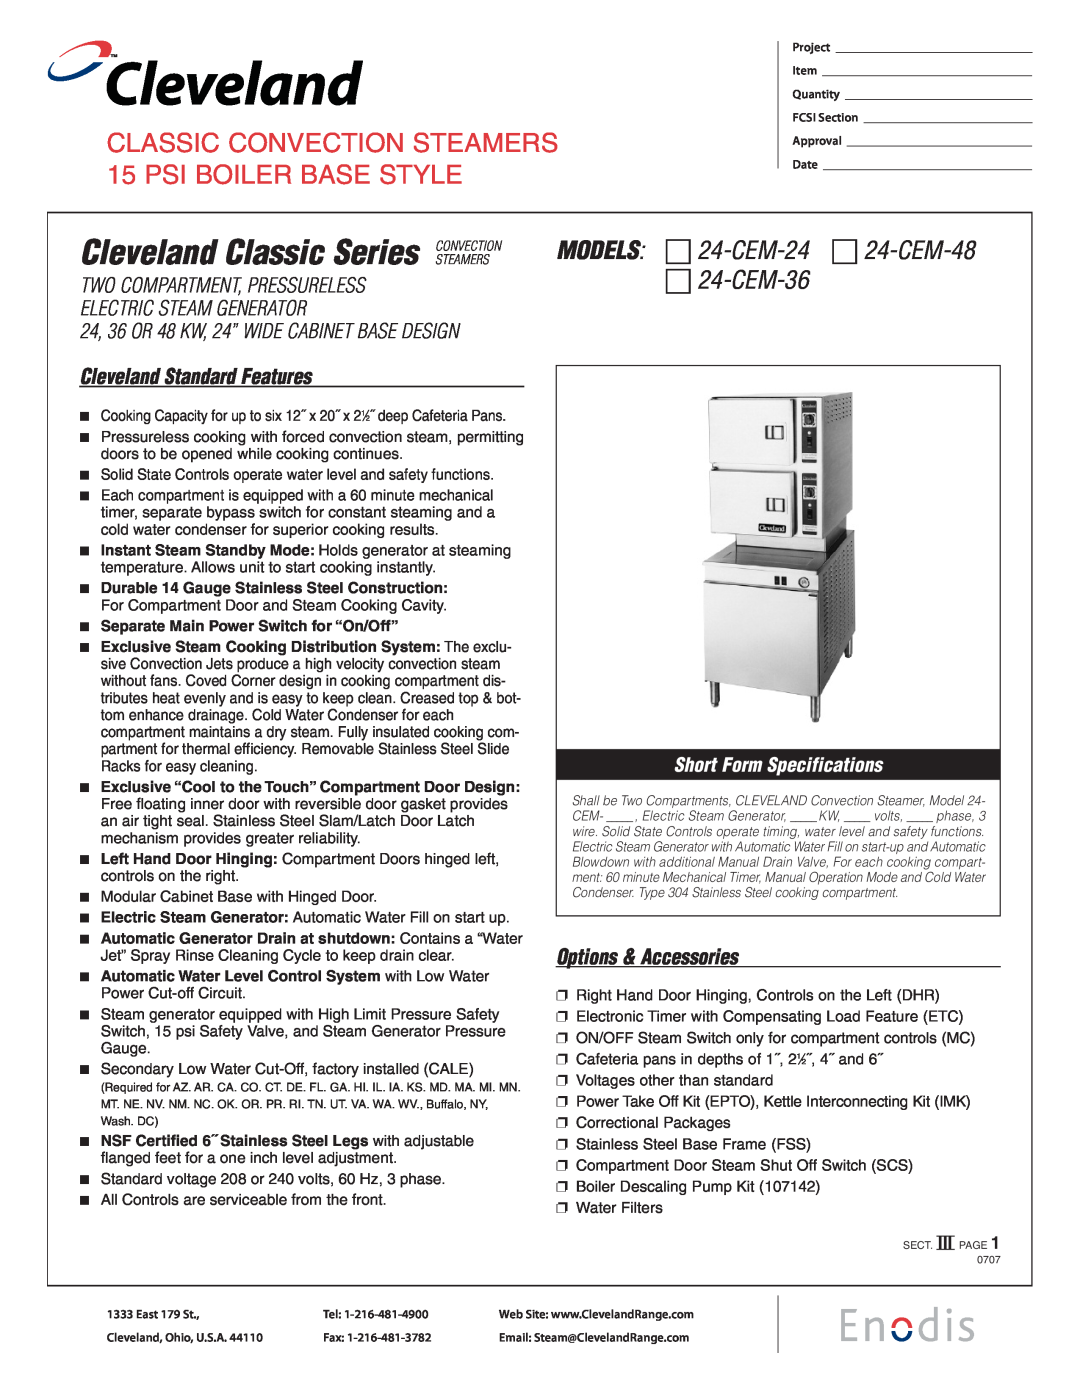 Cleveland Range 24-CEM-24, 24-CEM-36 specifications Cleveland Classic Series CONVECTION, Models, χ 24-CEM-48 